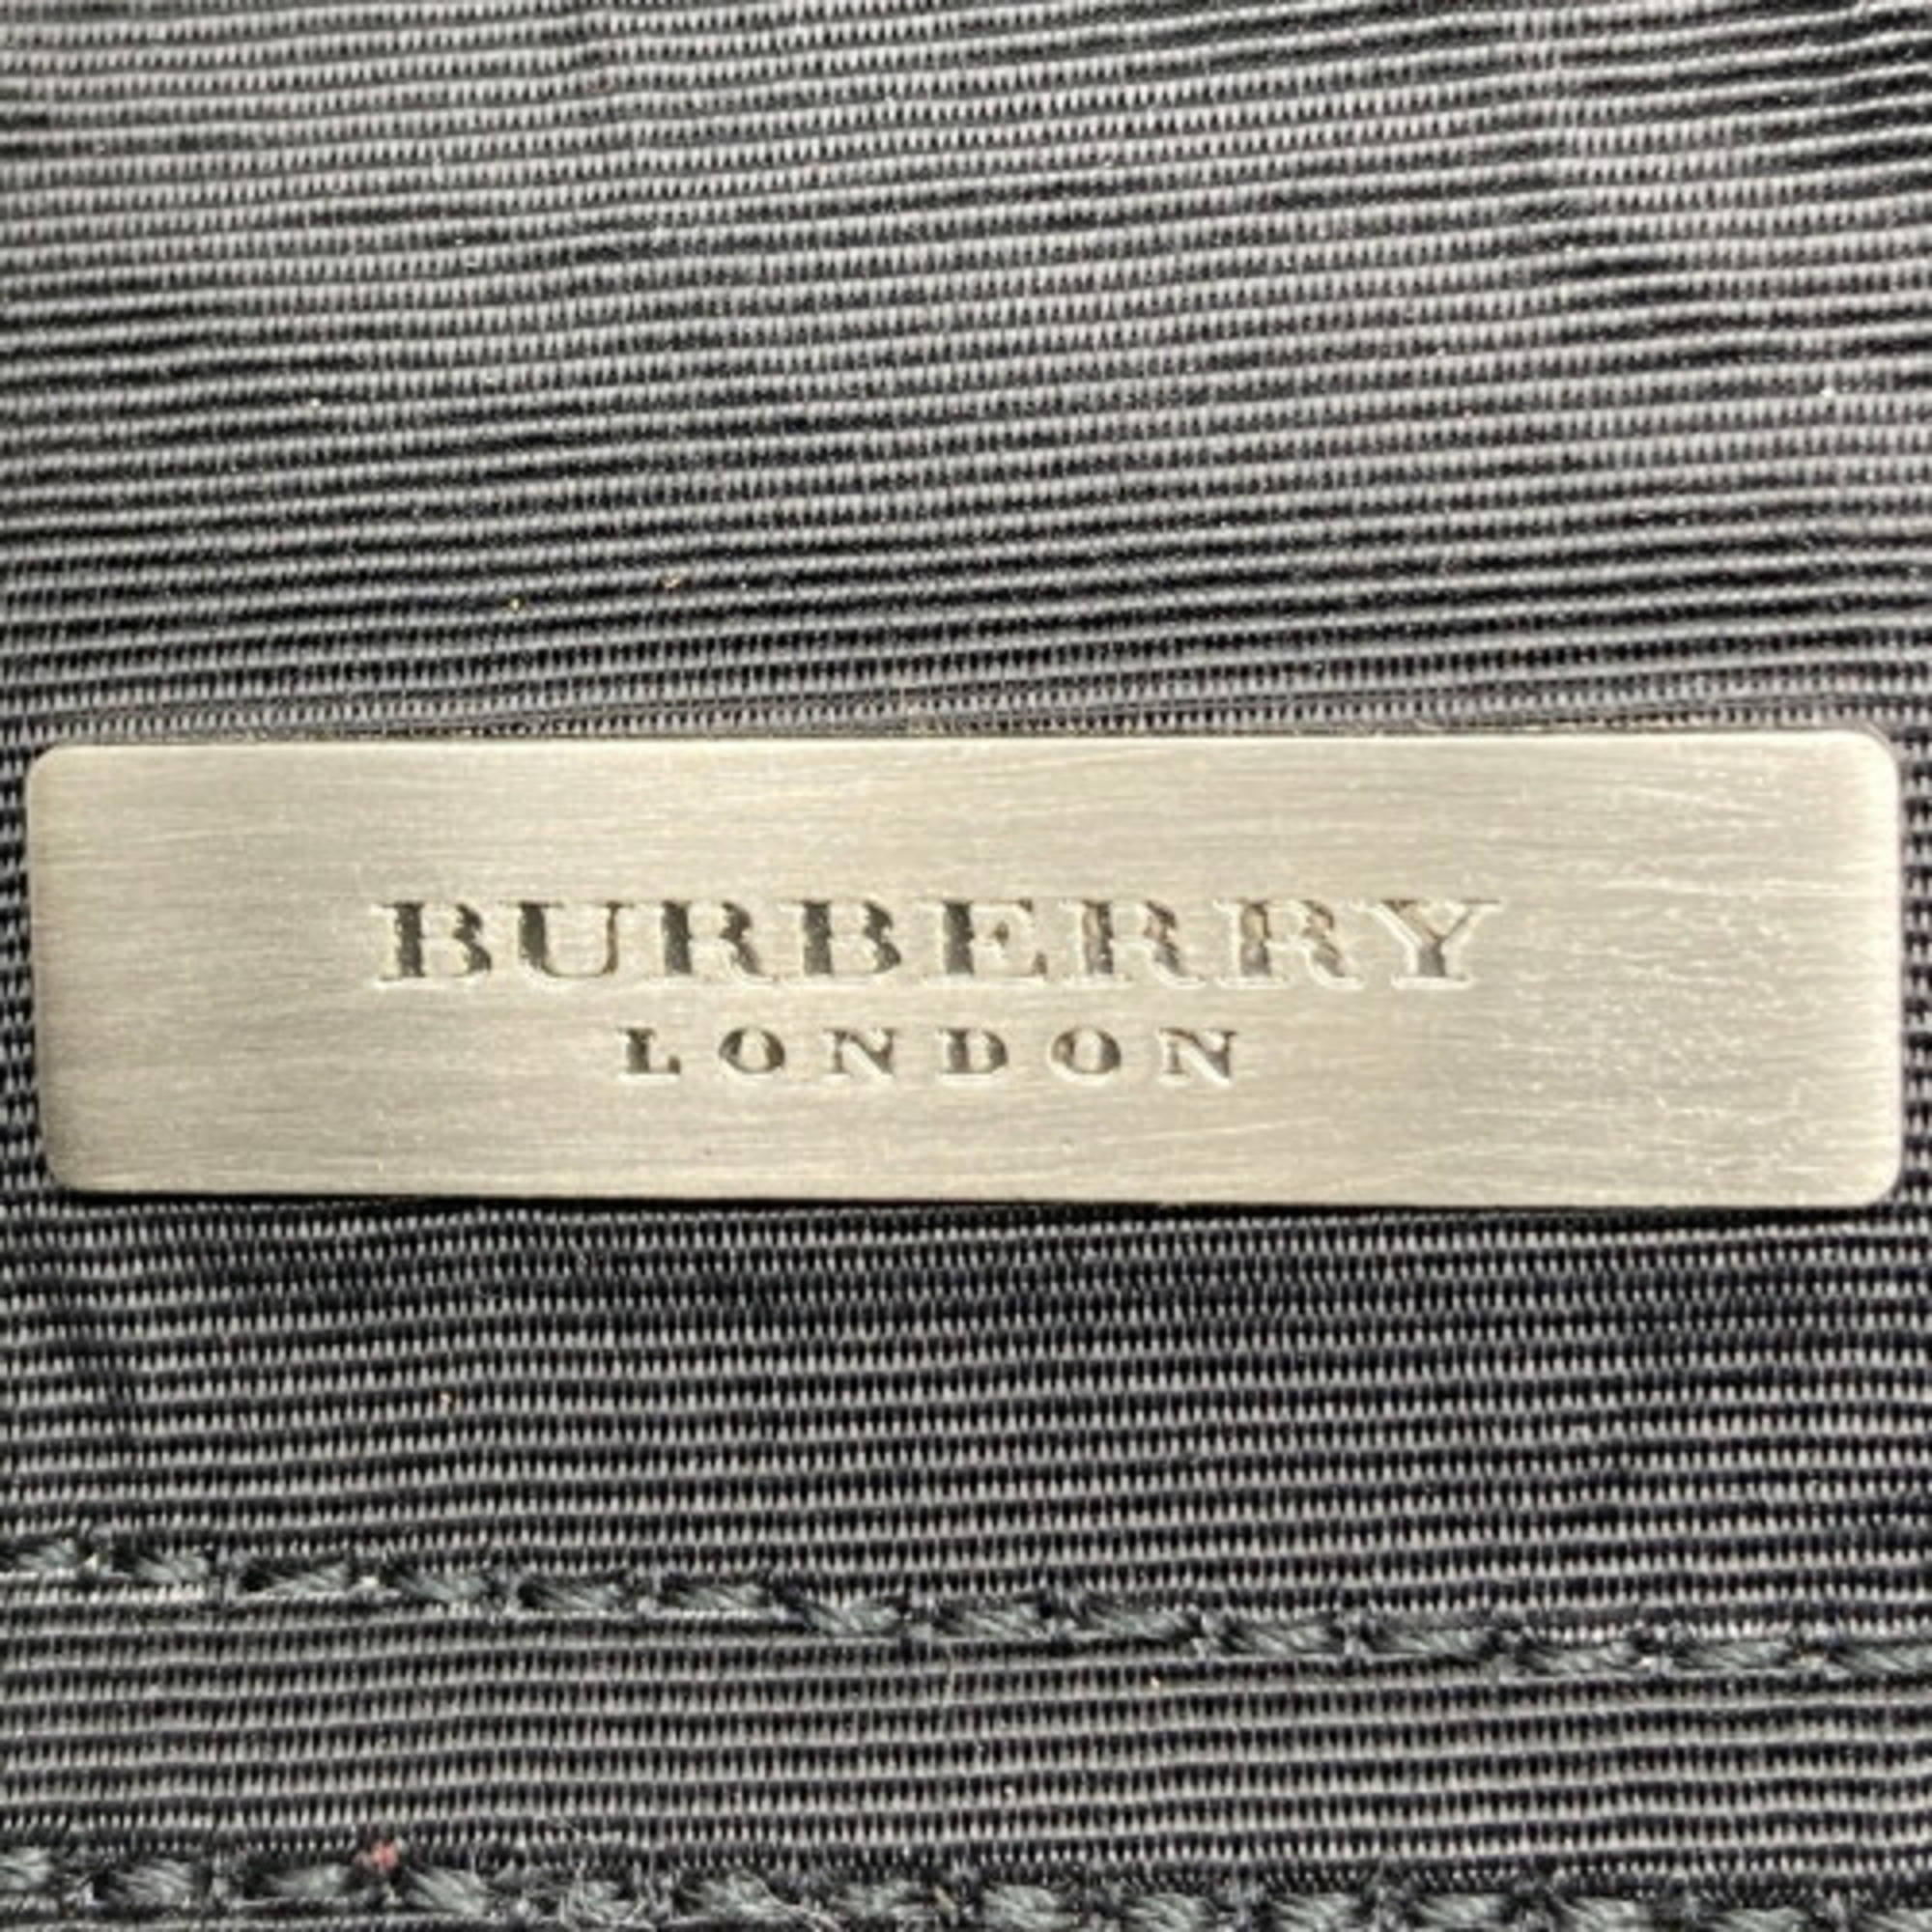 BURBERRY Burberry shoulder bag black nylon leather men's women's USED IT64PK5EOR60